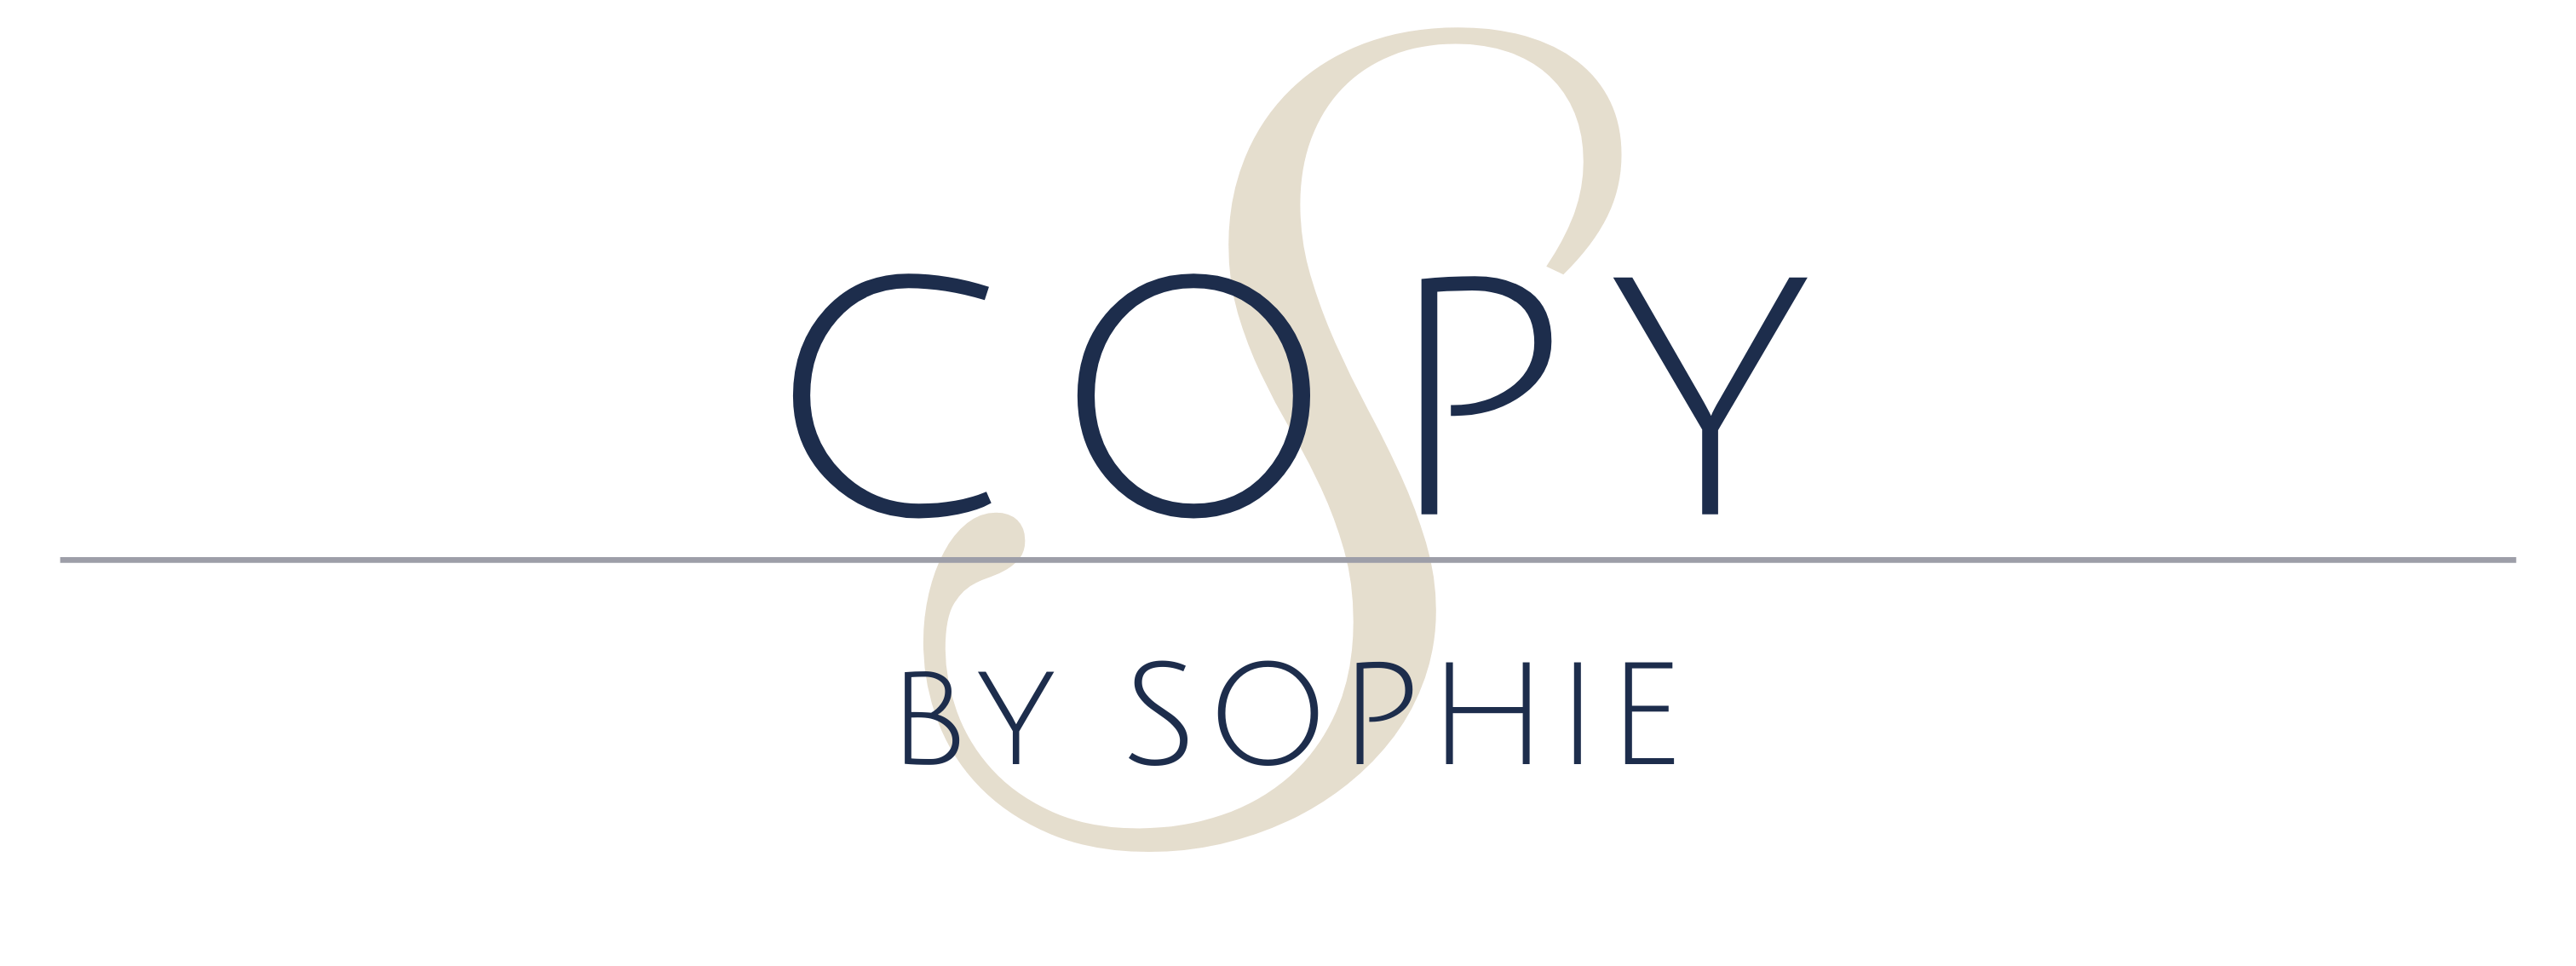 Creative Copywriter Sydney | Copy By Sophie | SEO Copywriter Sydney